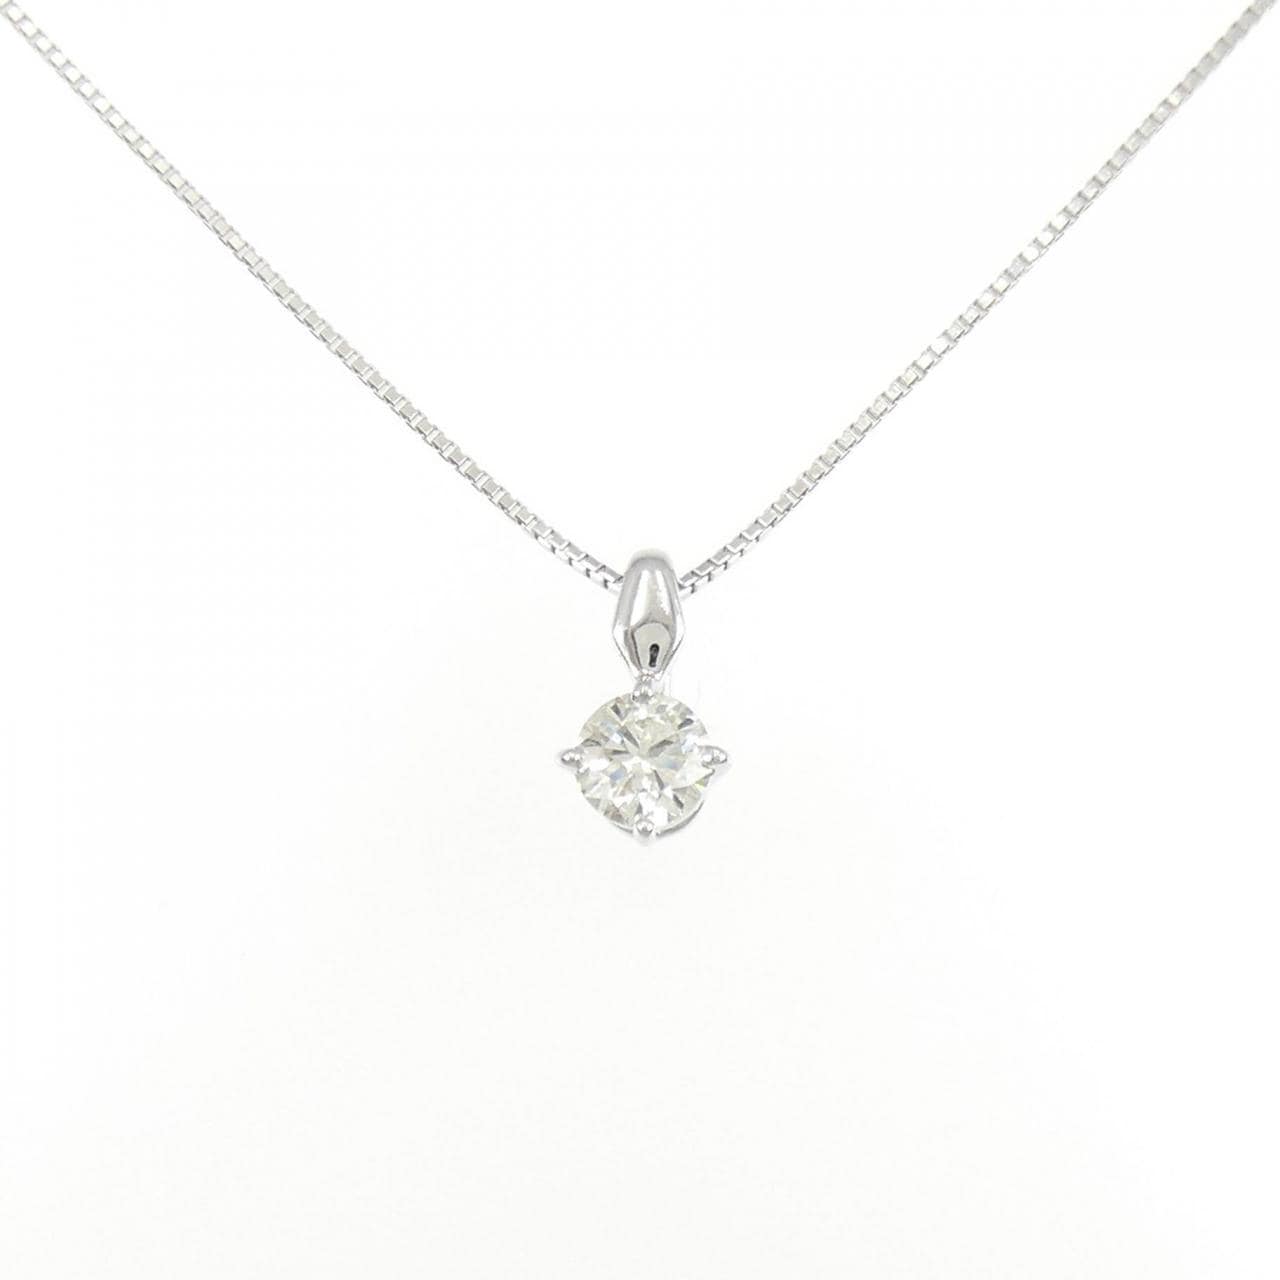 K18WG Solitaire Diamond Necklace 0.50CT